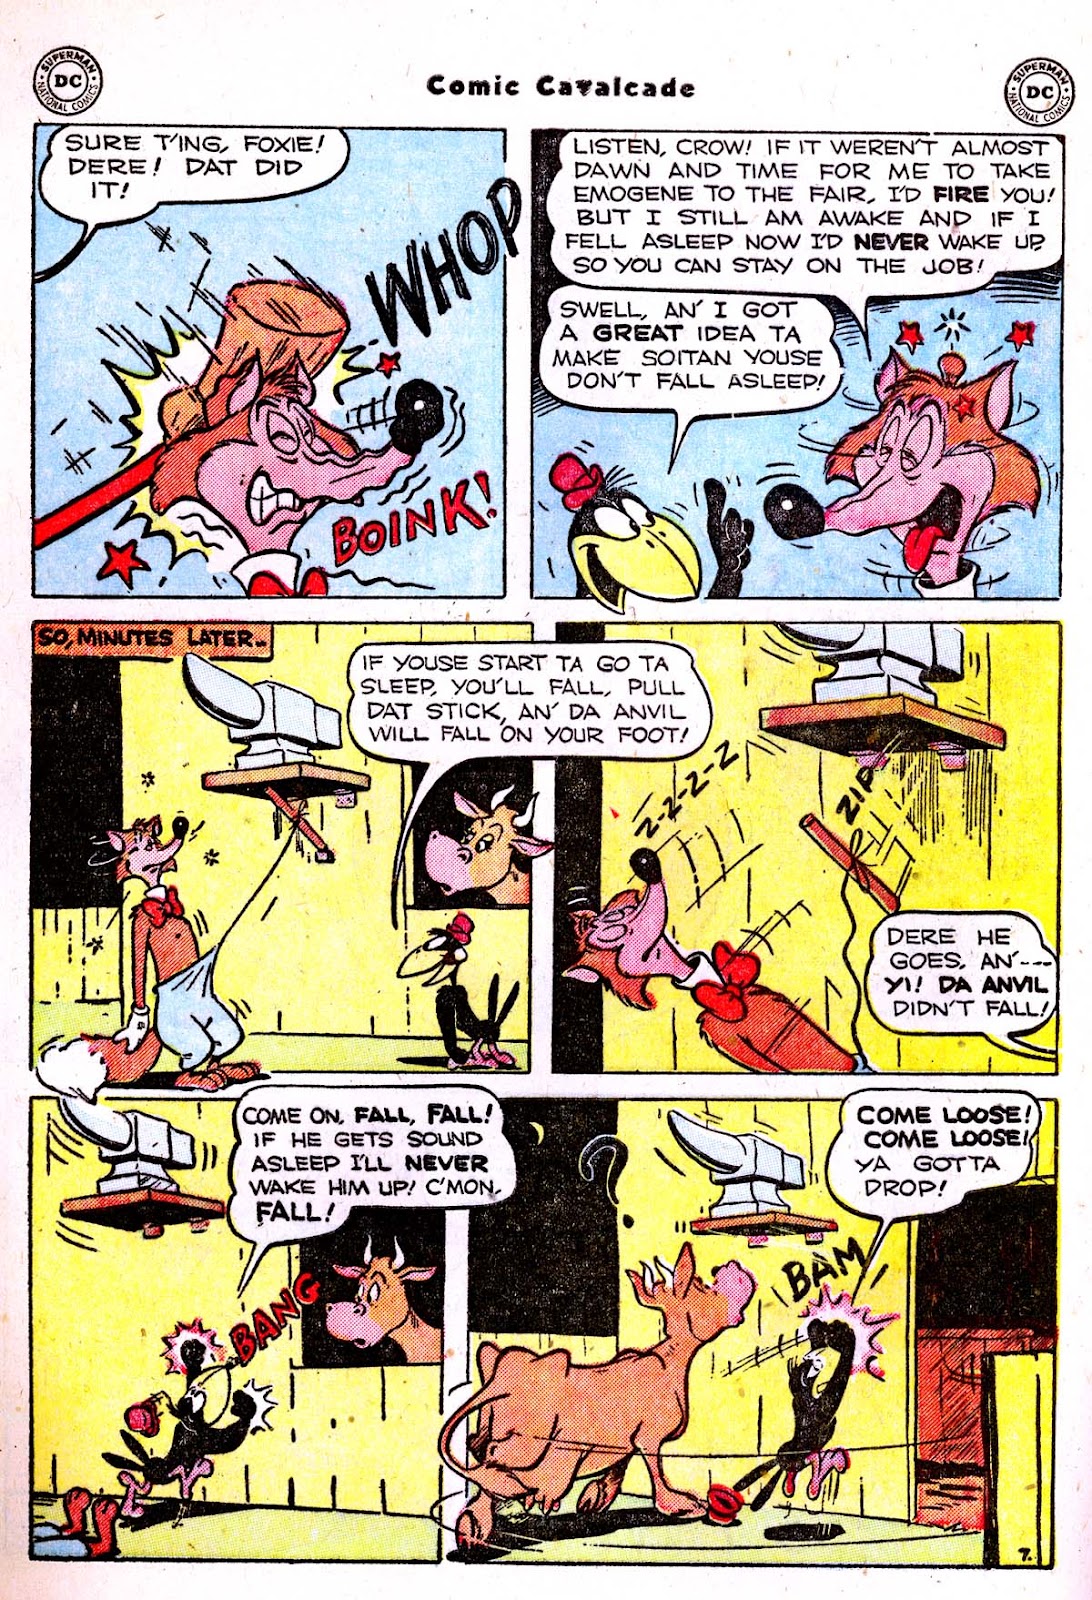 Comic Cavalcade issue 48 - Page 9